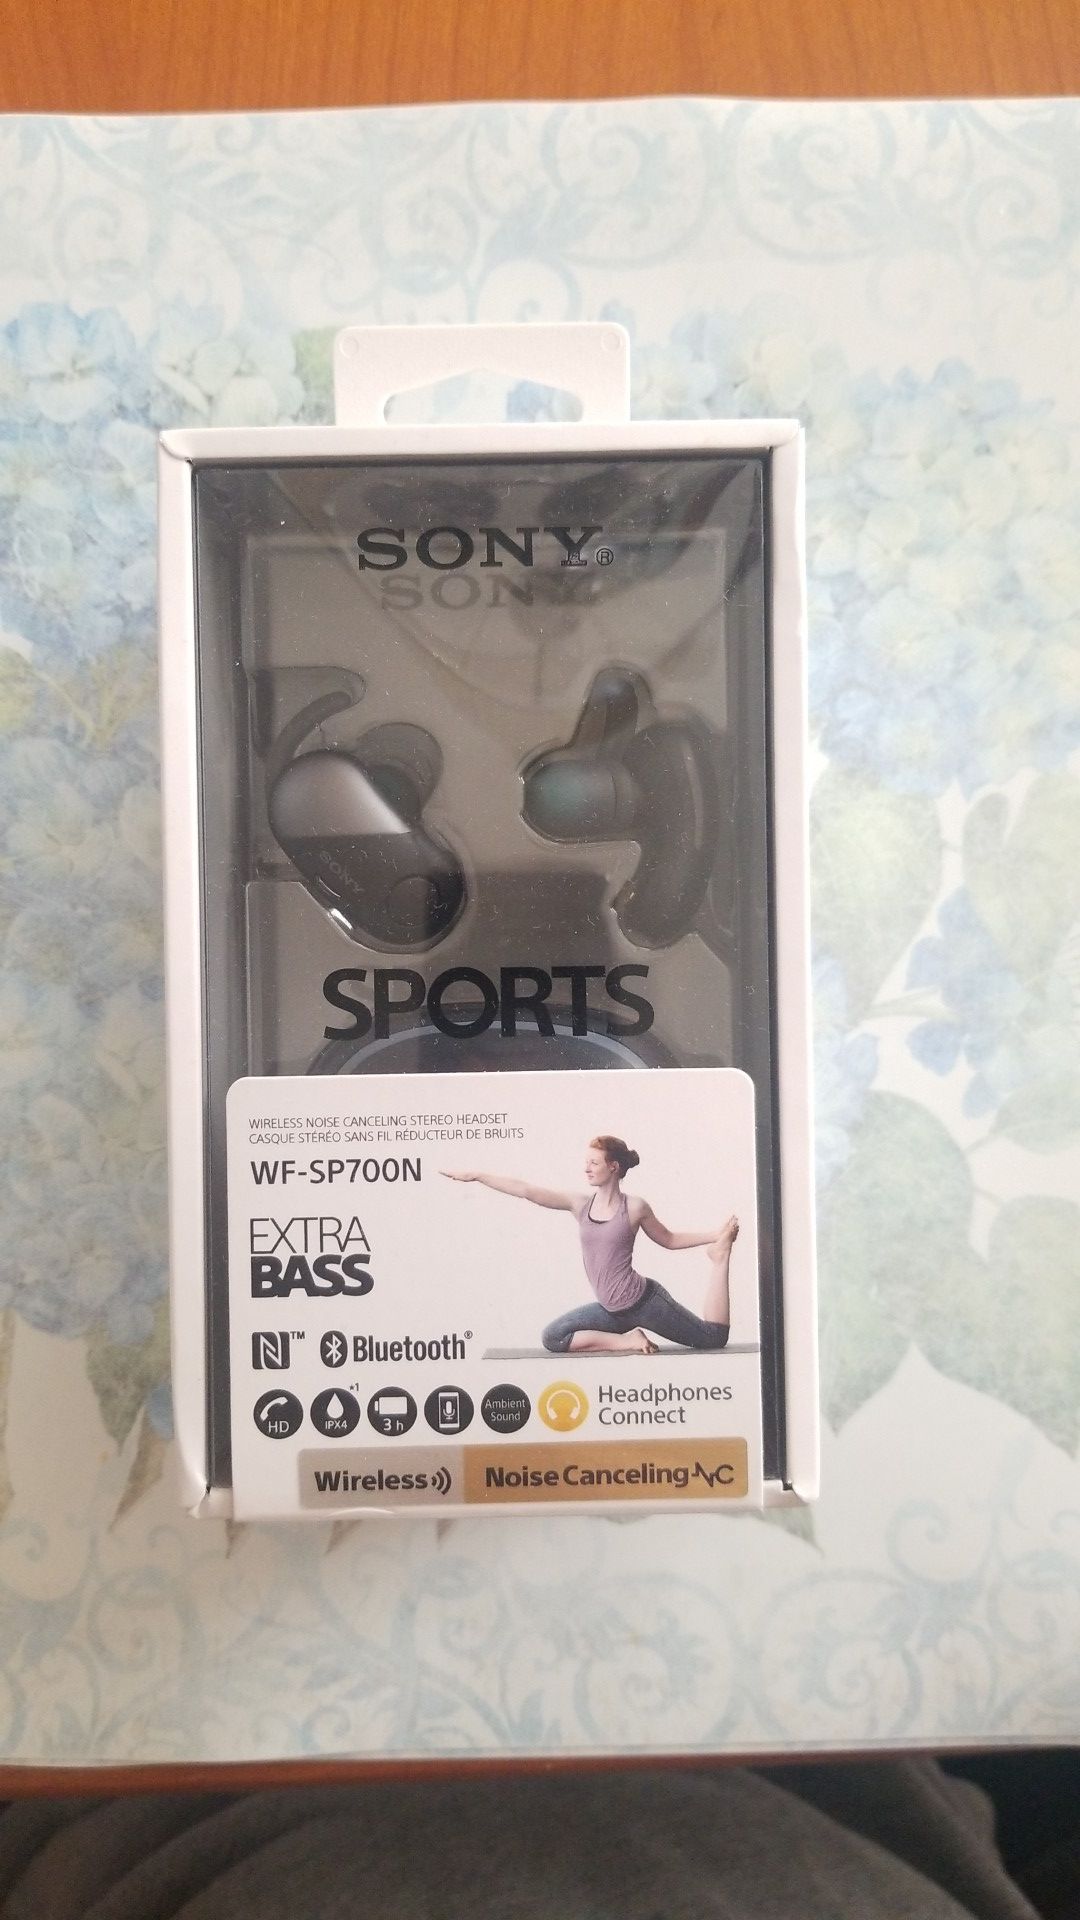 New Sony wireless noise canceling earbuds